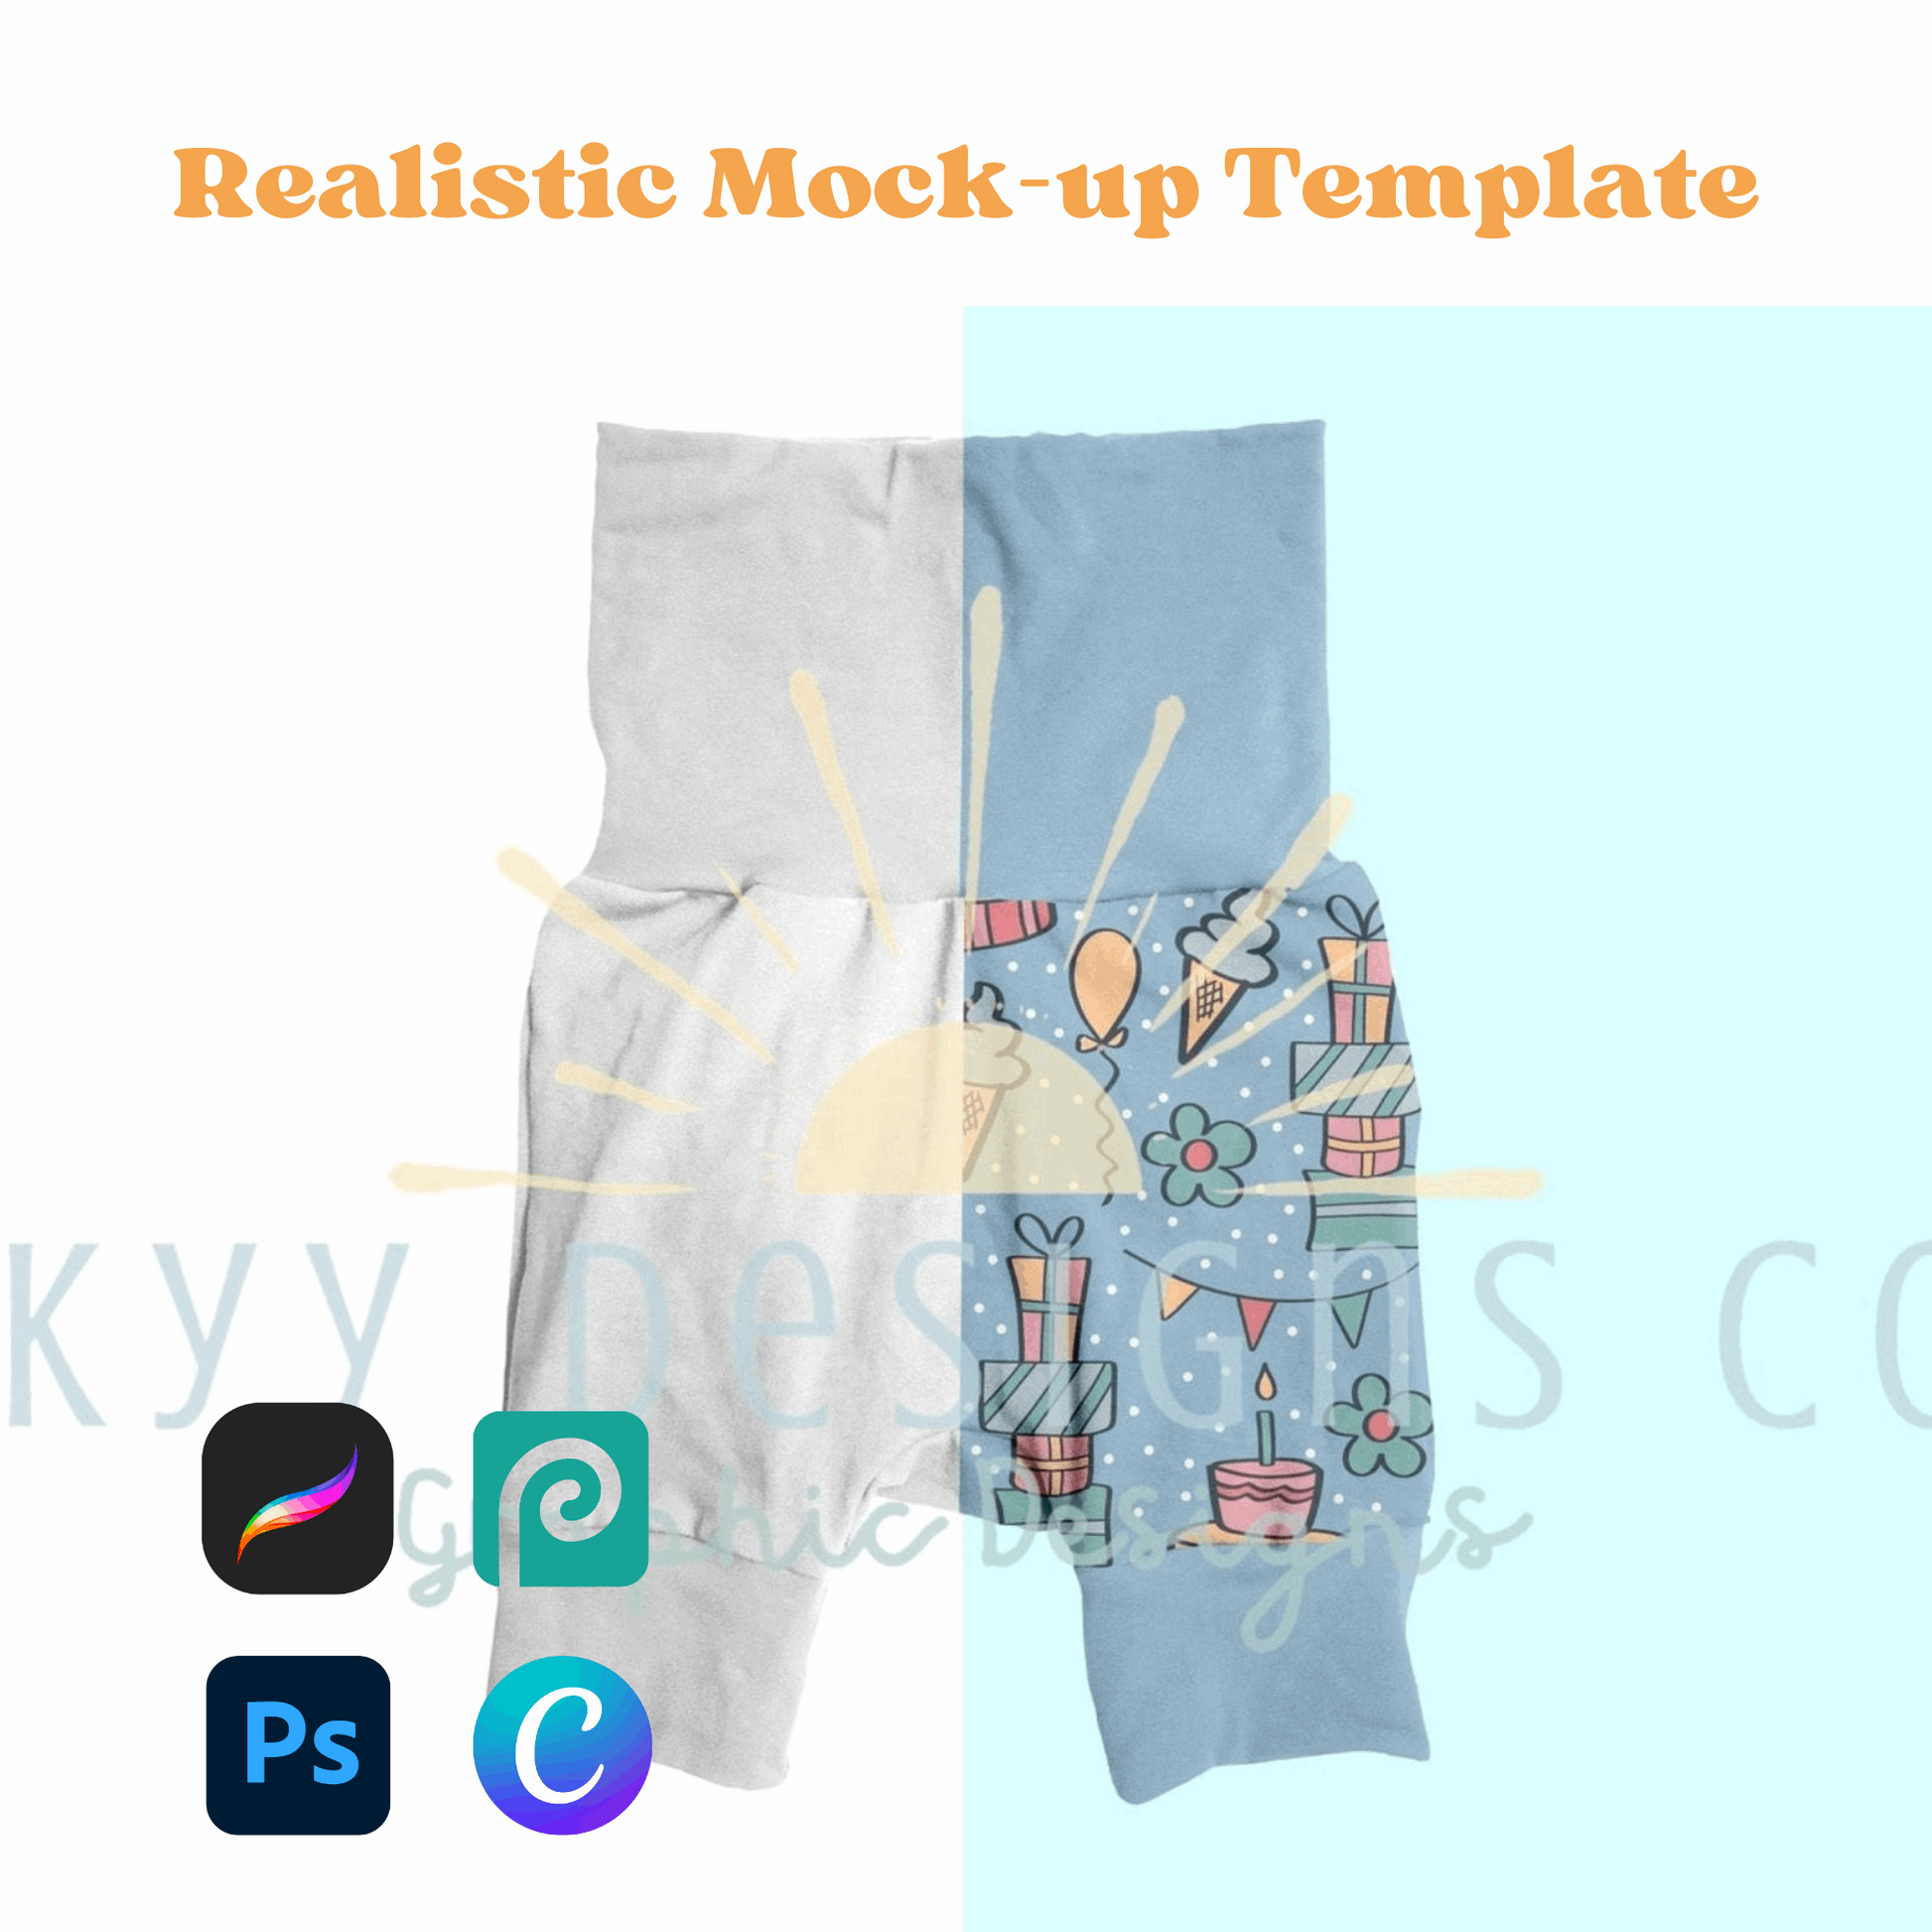 Kids waistband shorts mock-up template - SkyyDesignsCo